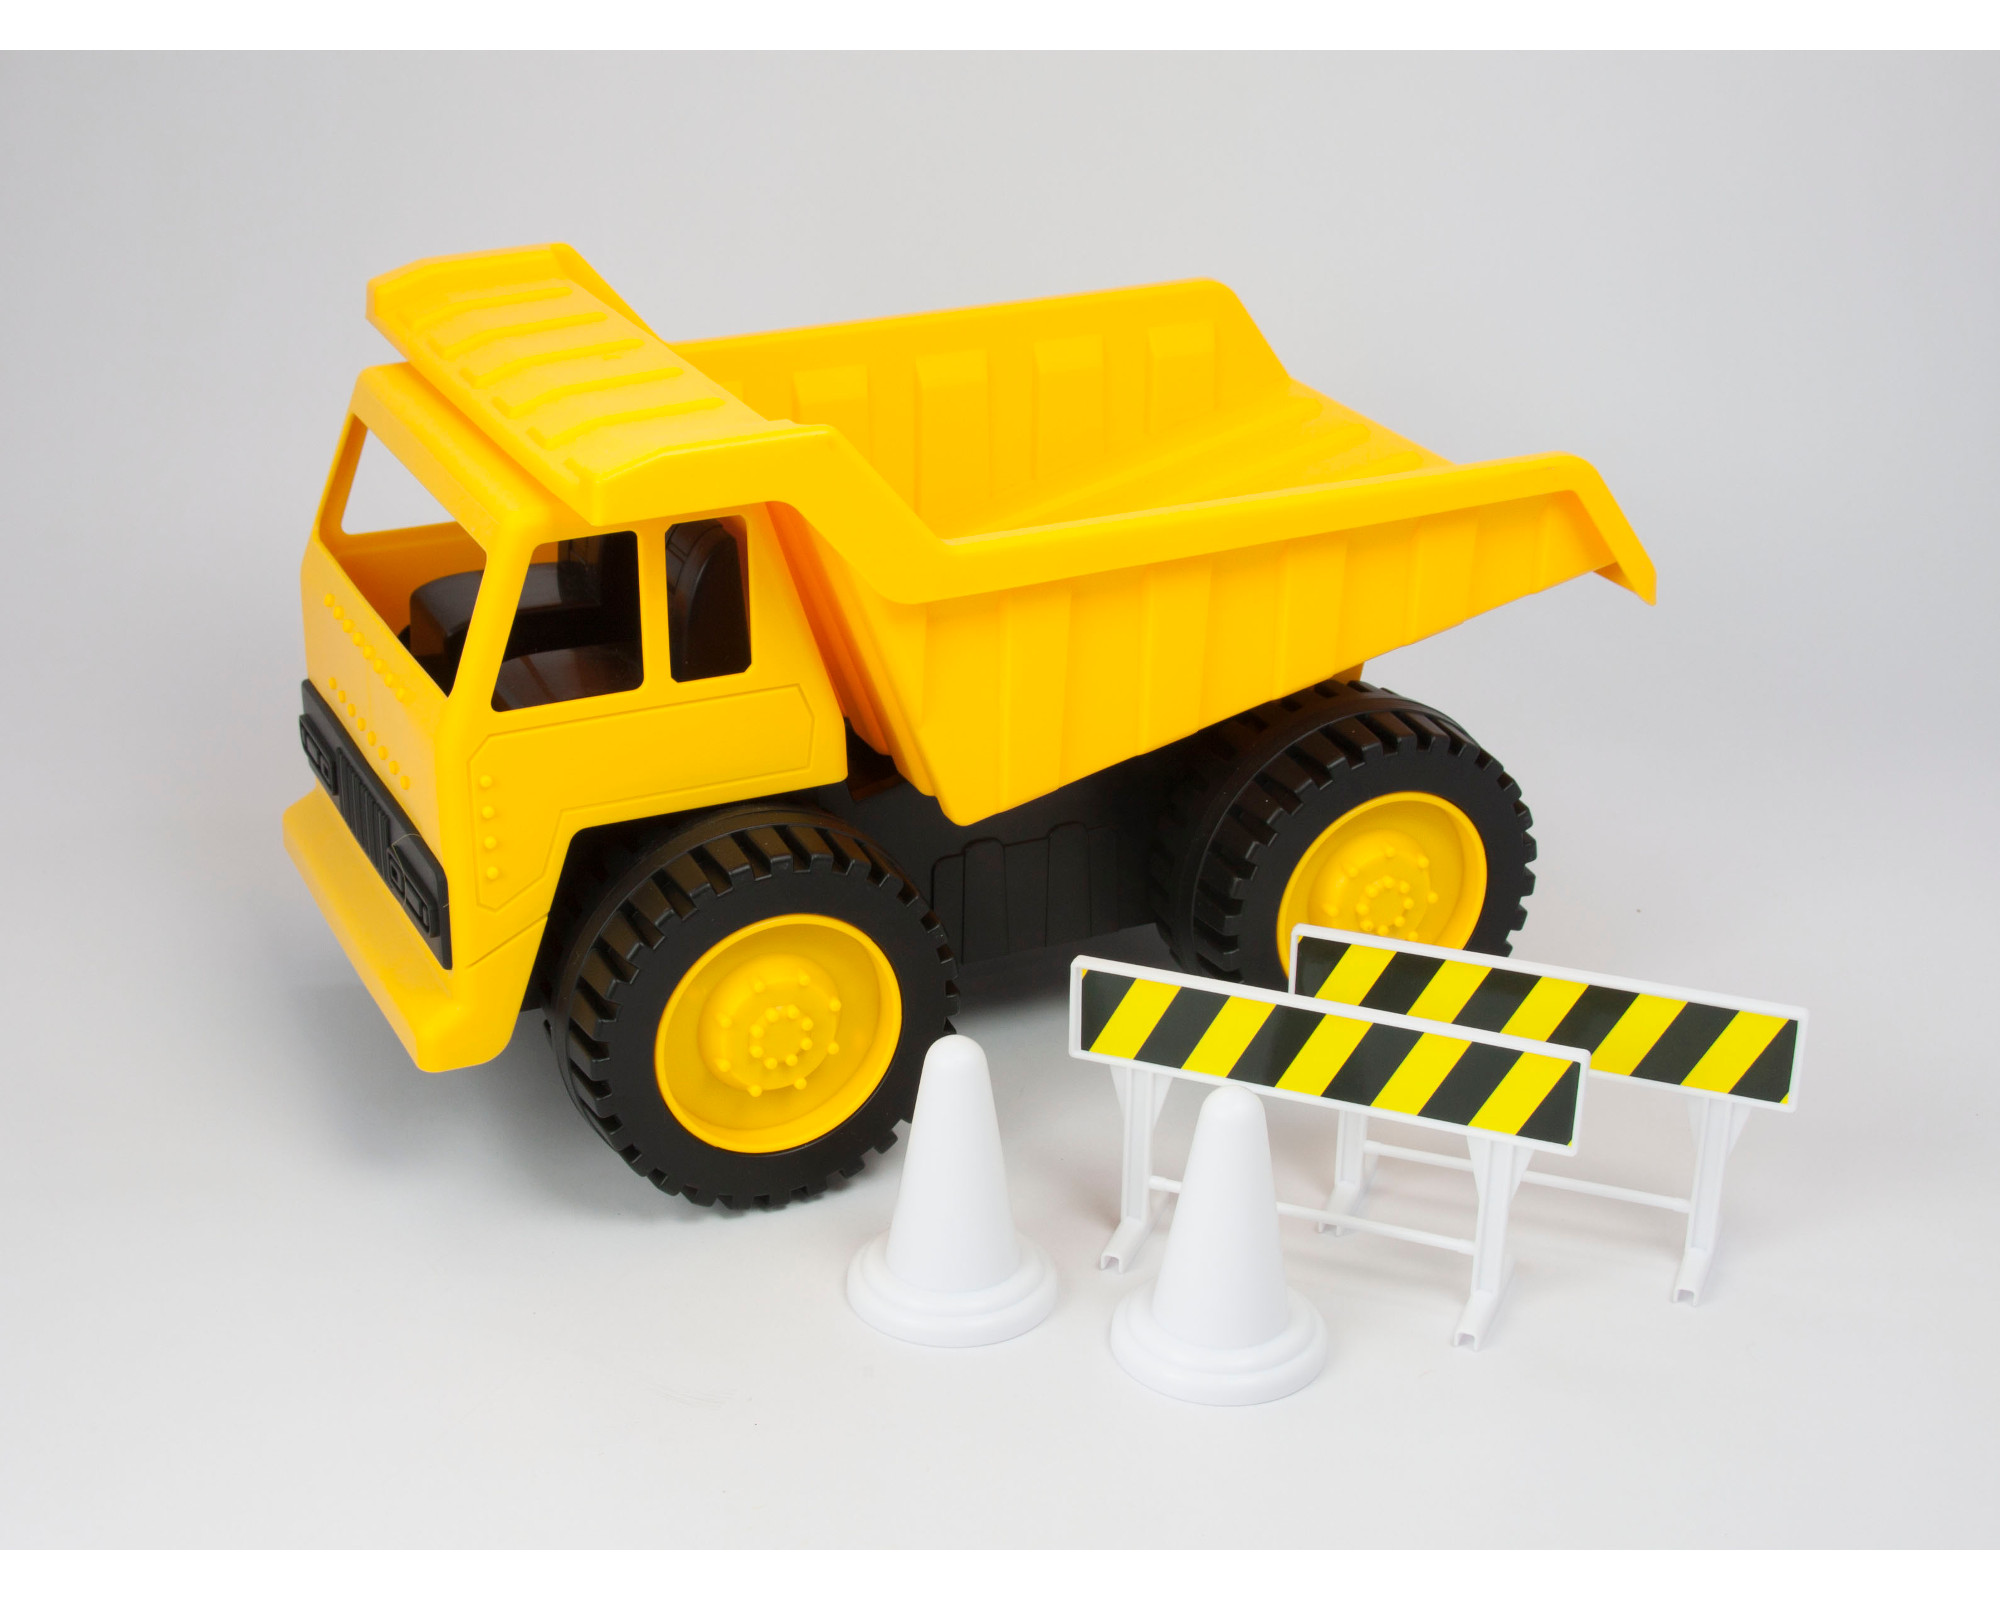 Goldlok Toys Dump Truck w/ Accessories | Shop Your Way: Online ...